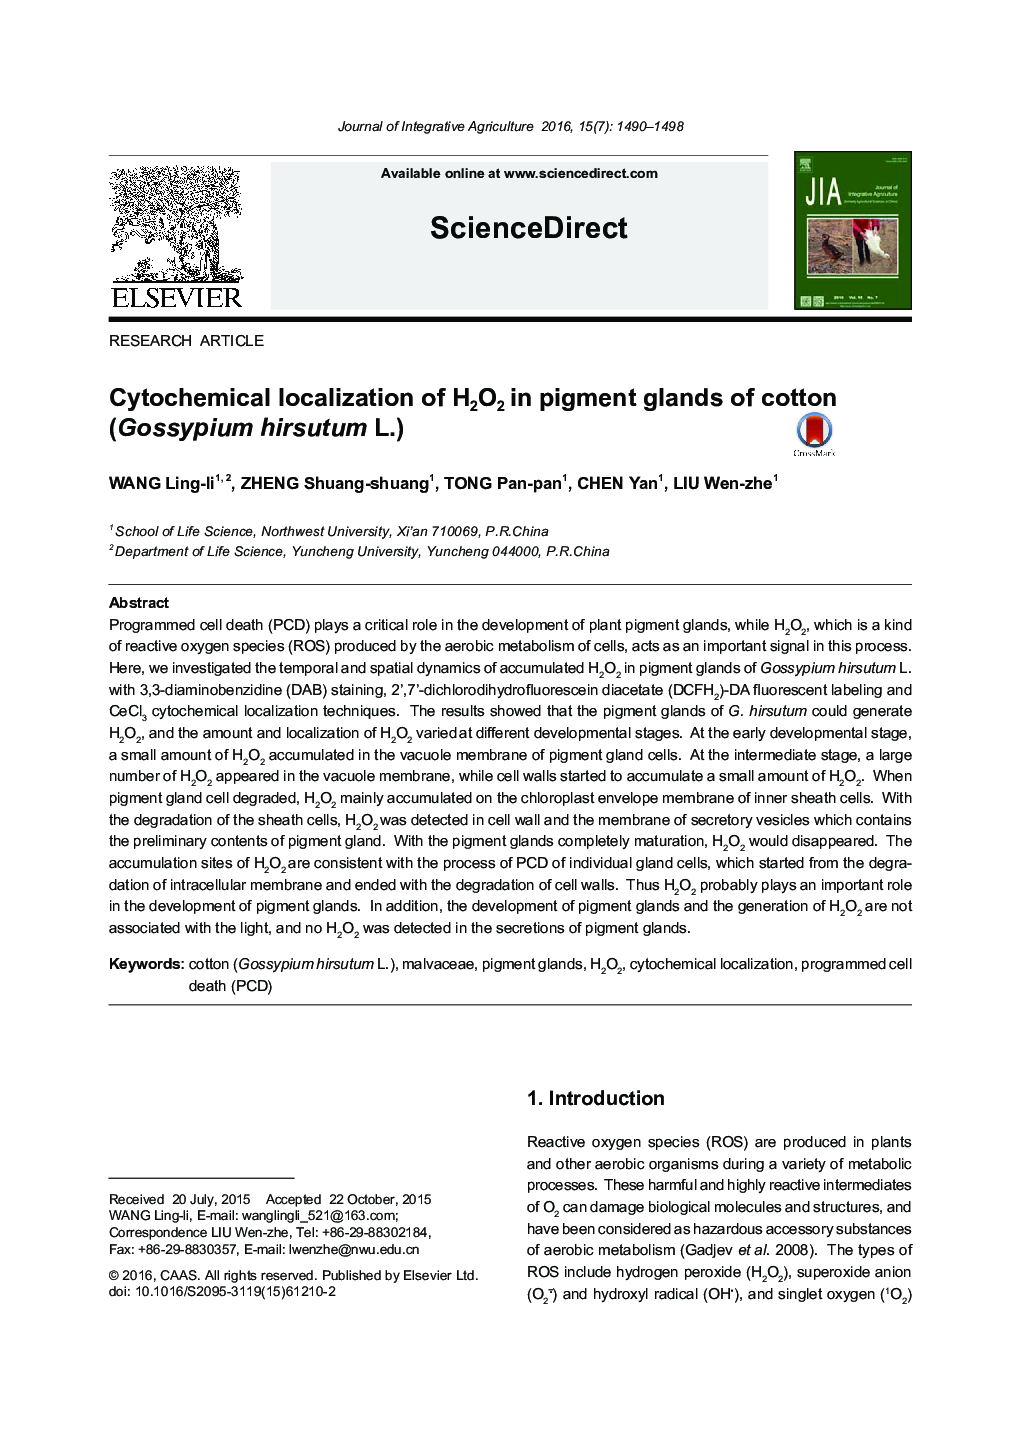 Cytochemical localization of H2O2 in pigment glands of cotton (Gossypium hirsutum L.)